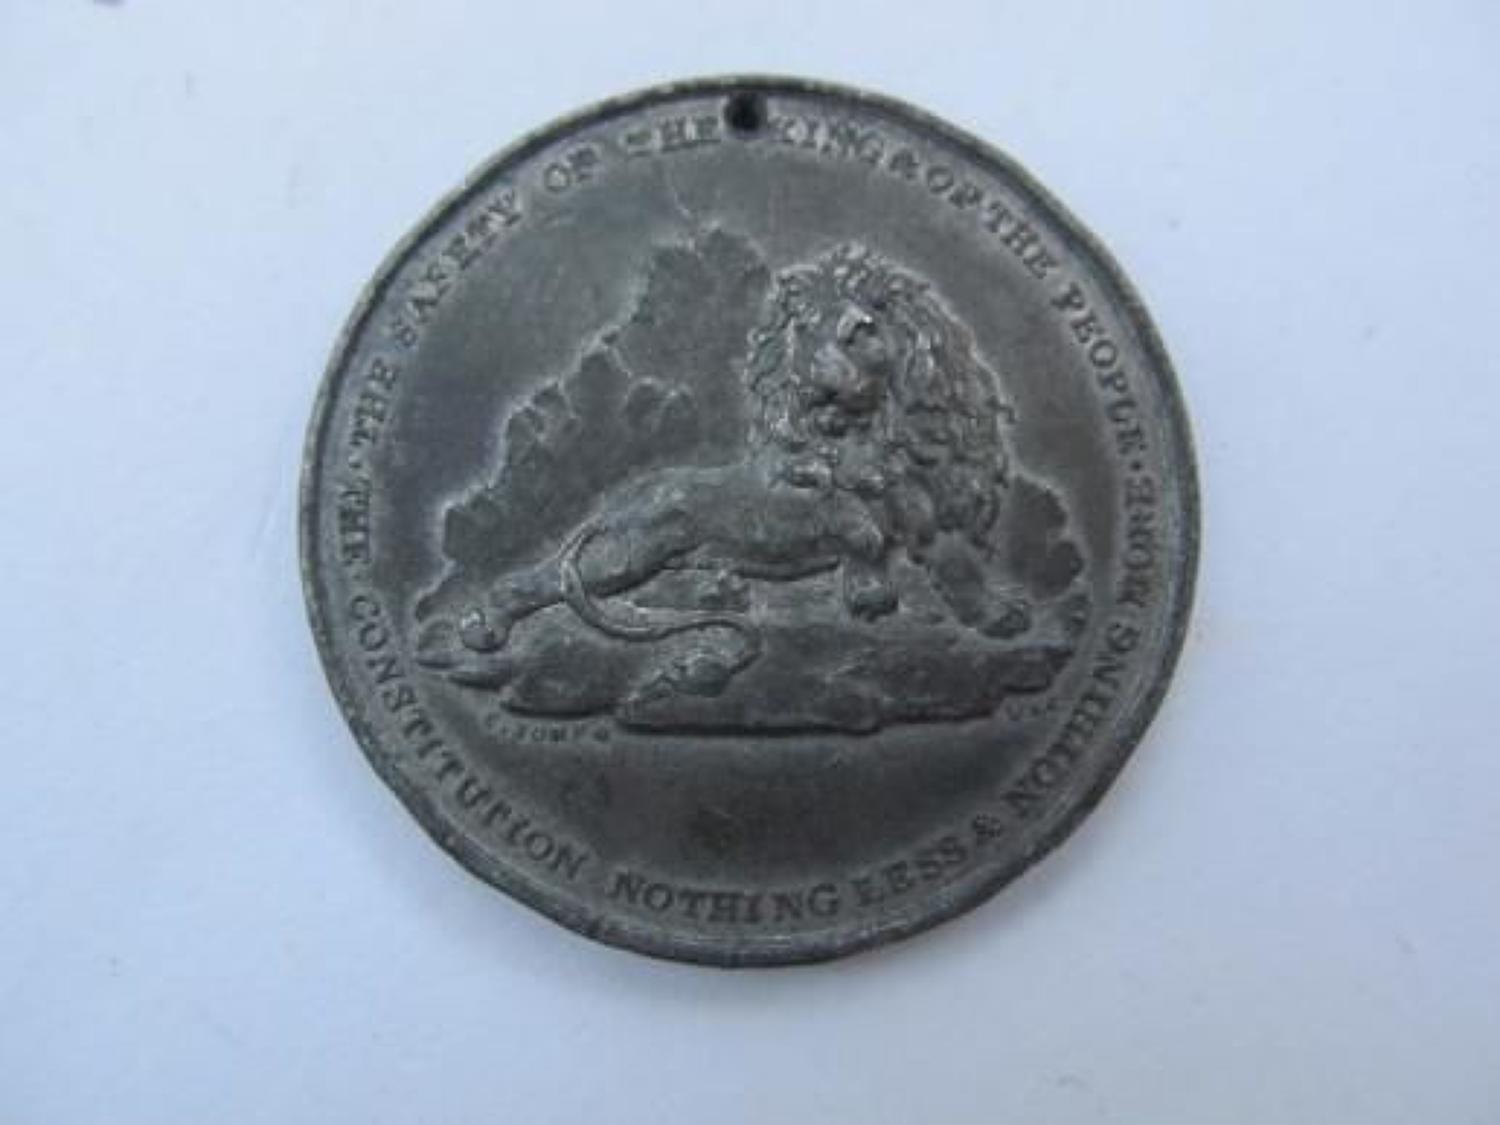 Birmingham Political Union 1830 Medallion